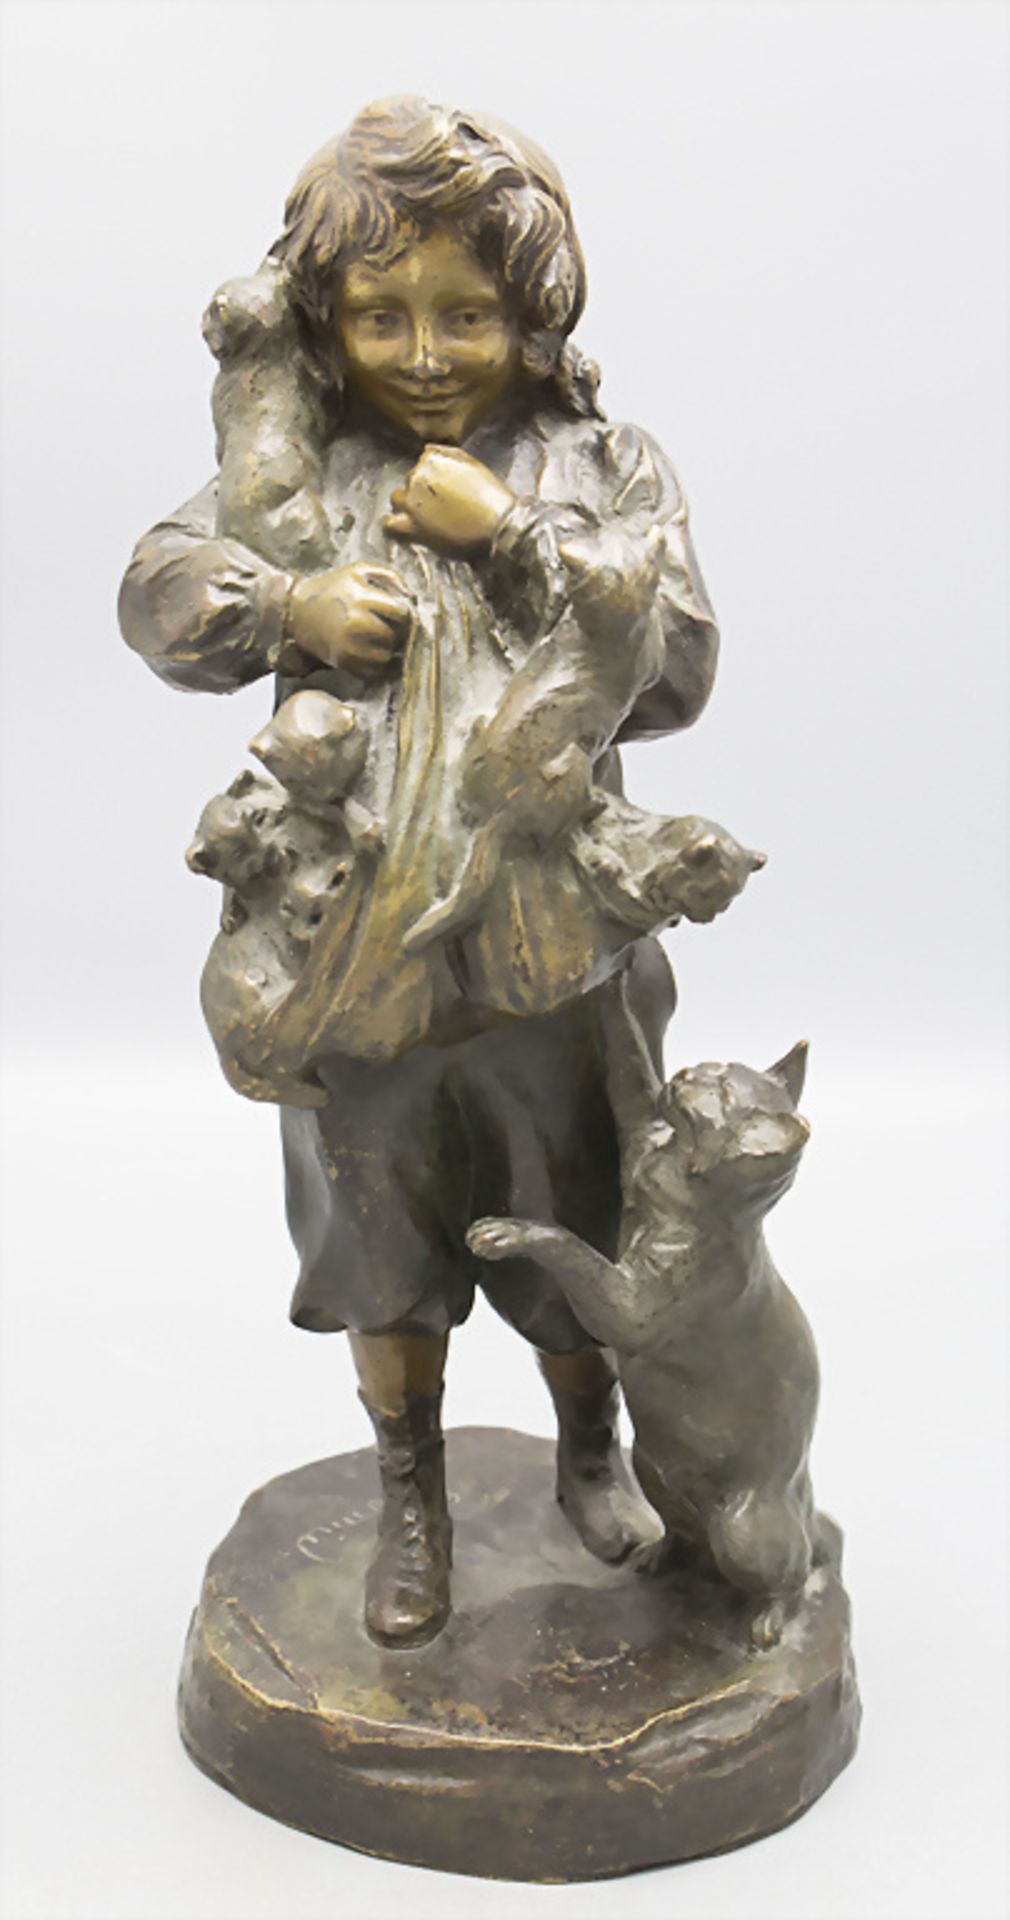 Bronzeskulptur 'Knabe mit Katzen' / A bronze sczulpture of a boy with cats, deutsch, um 1900